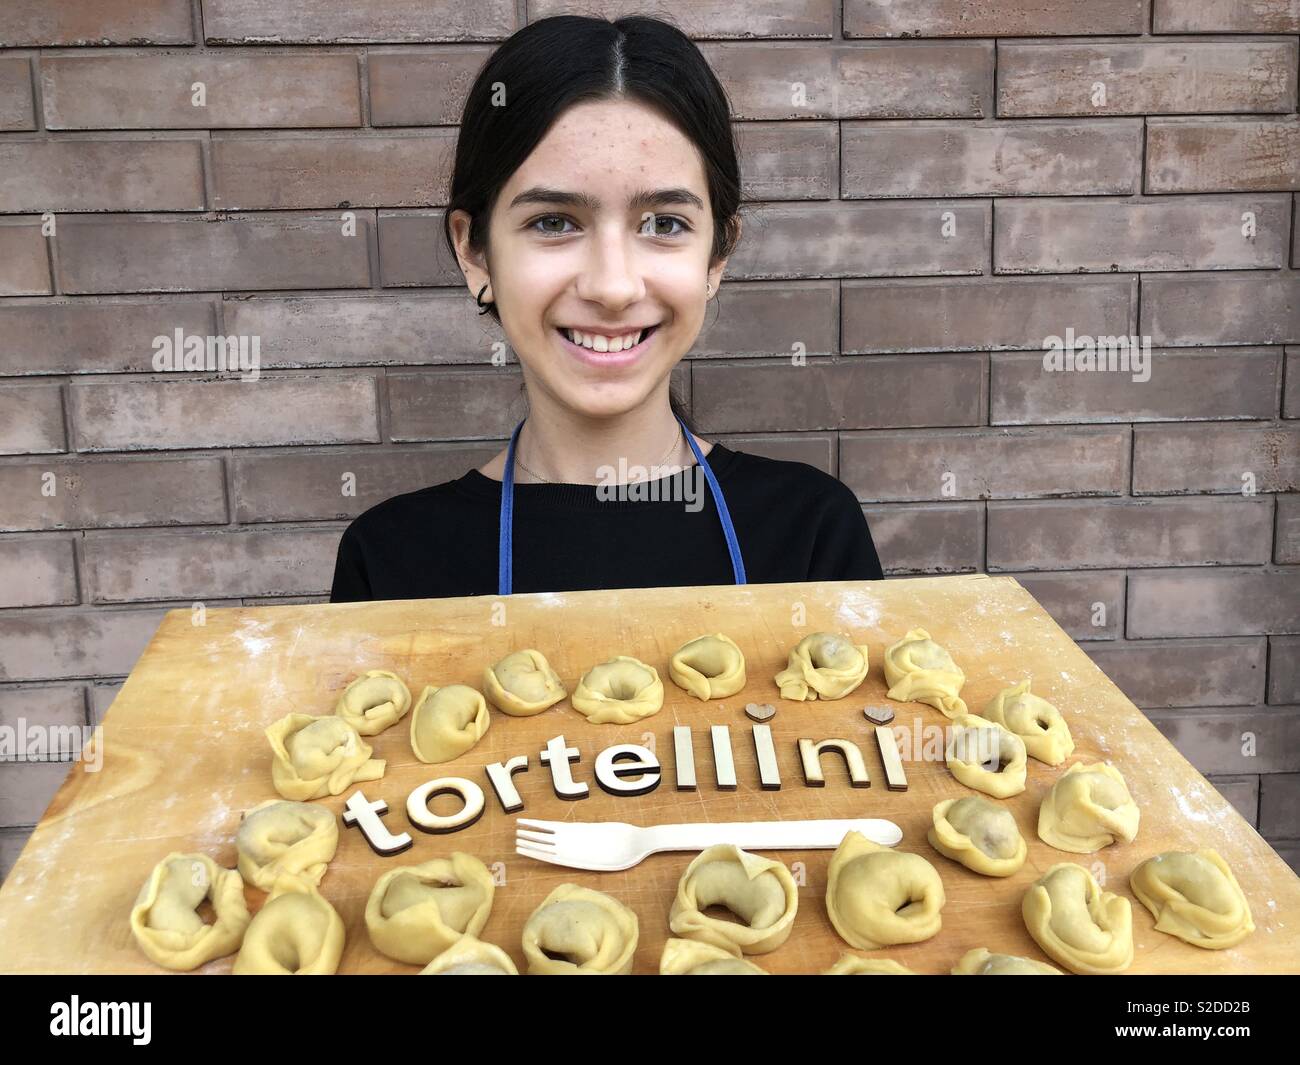 Making Pasta Tortellini Home On Wooden Stock Photo 1884537310